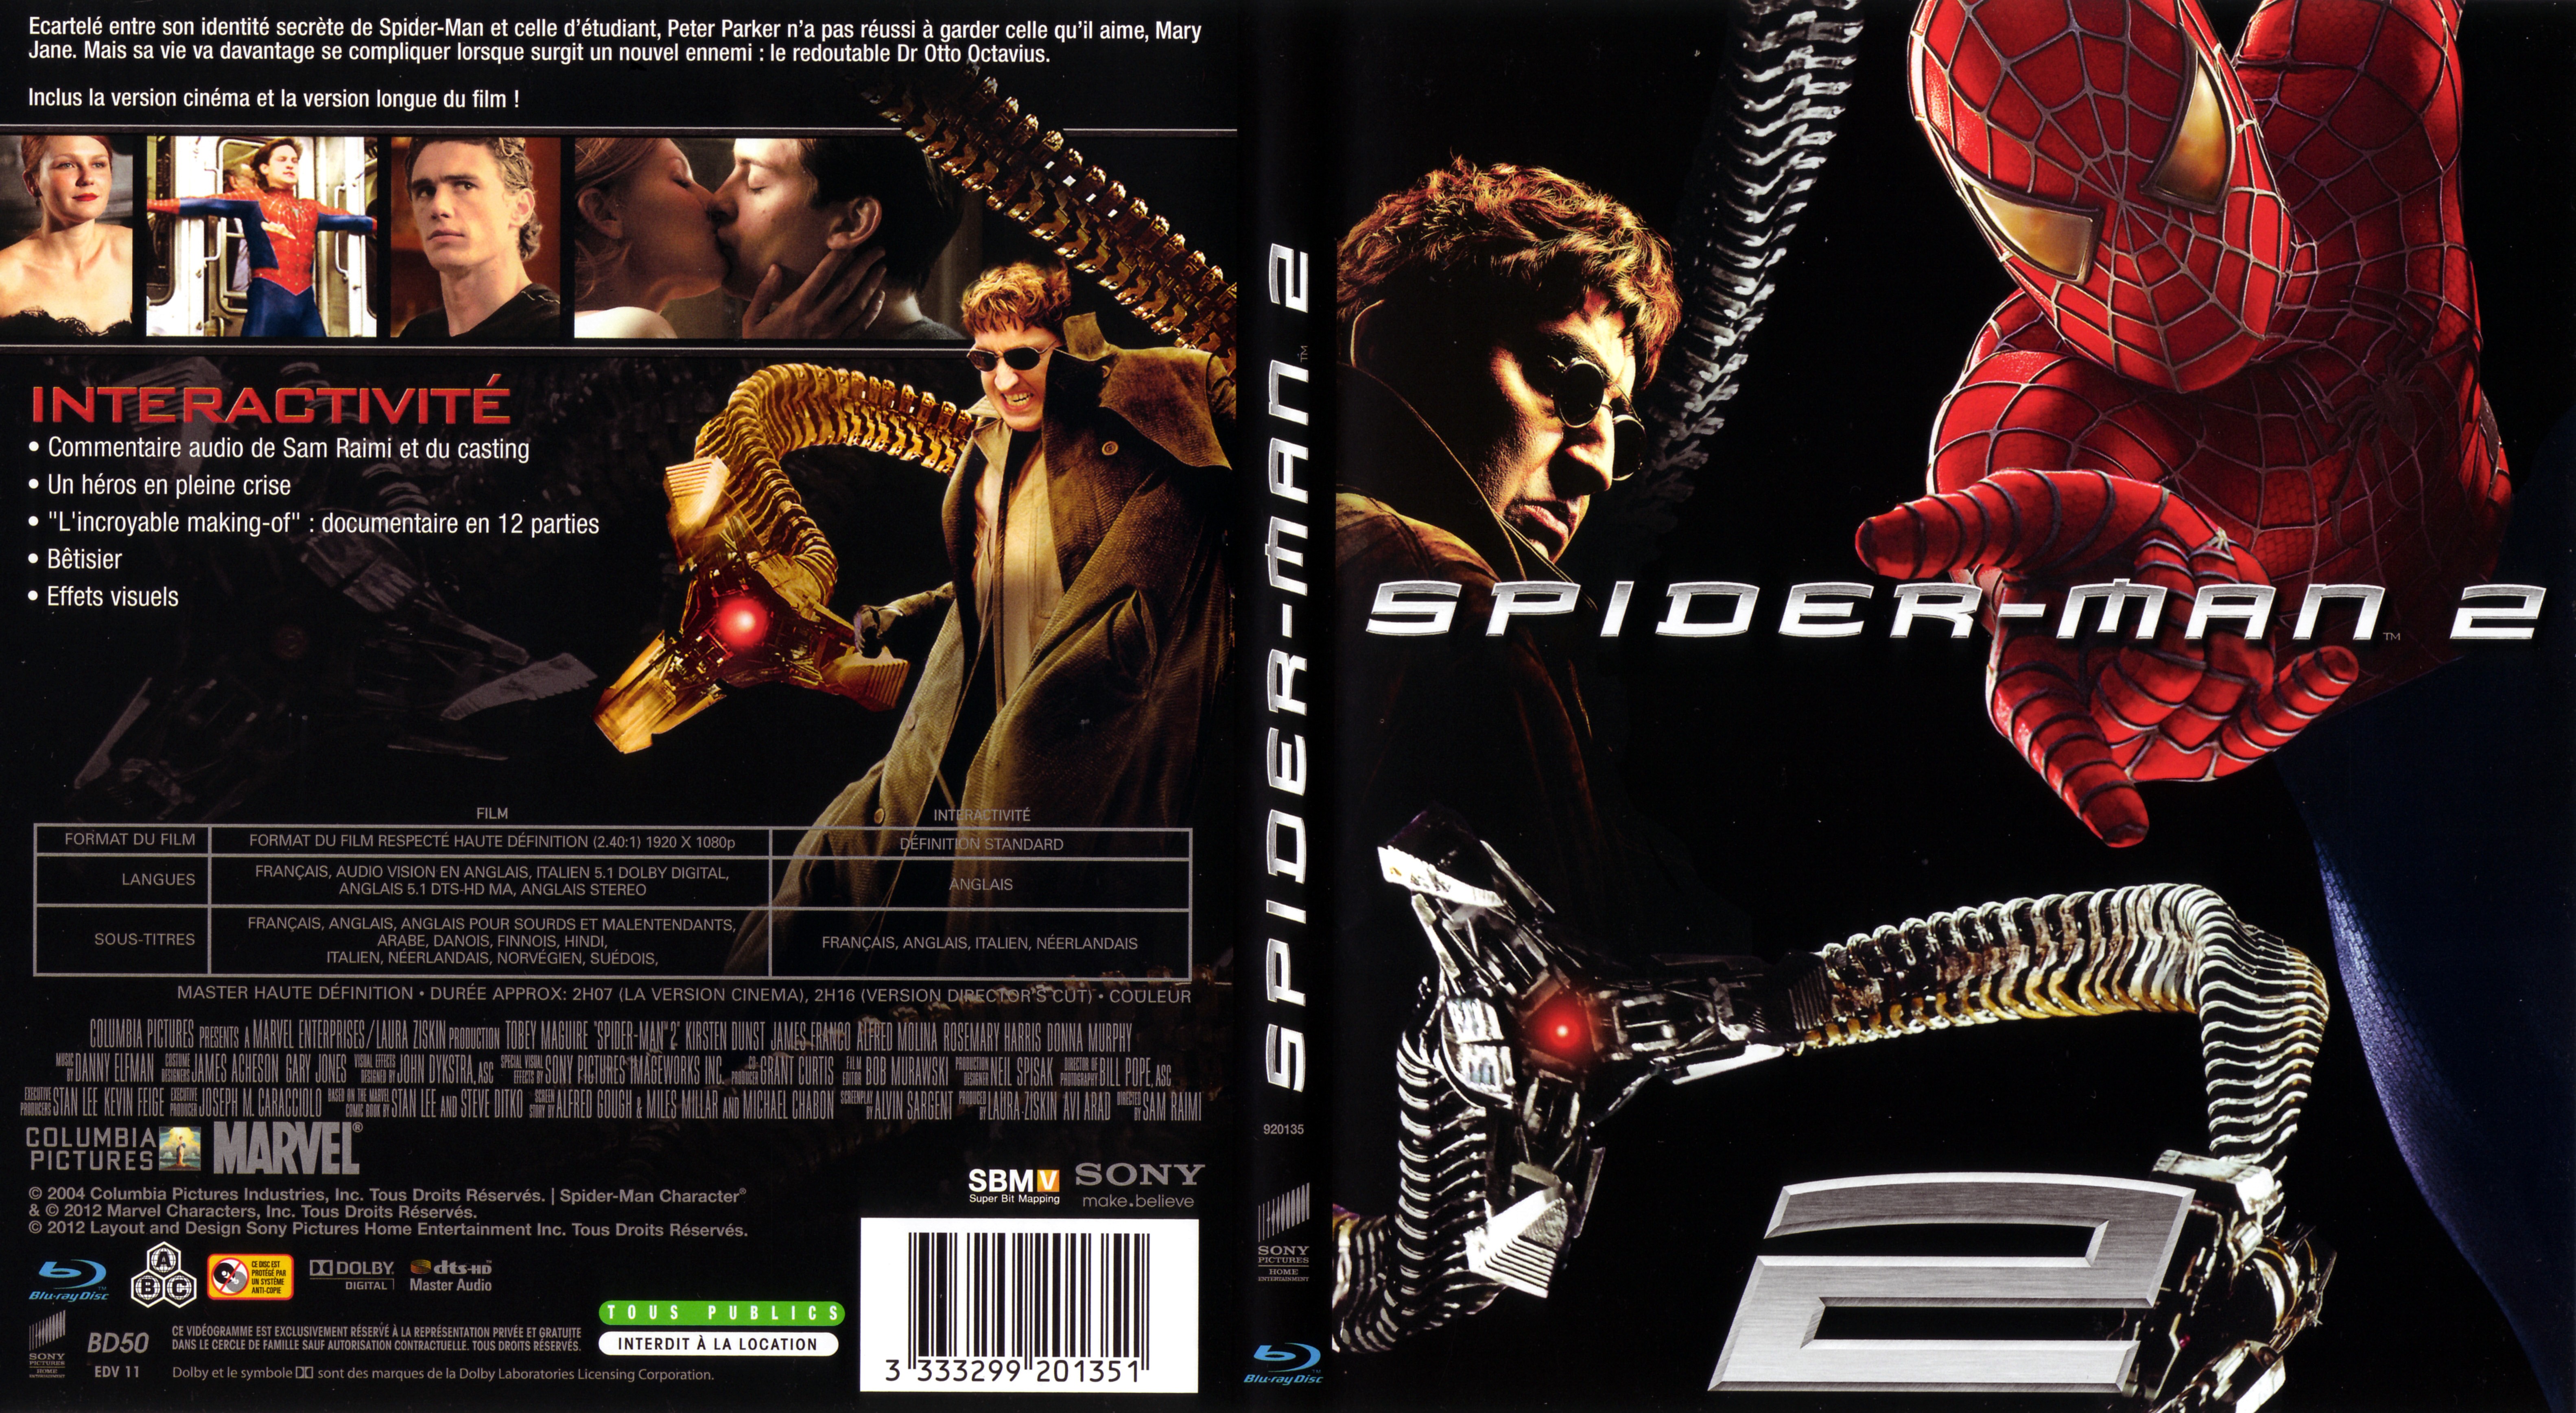 Jaquette Dvd De Spiderman 2 Blu Ray V4 Cinéma Passion